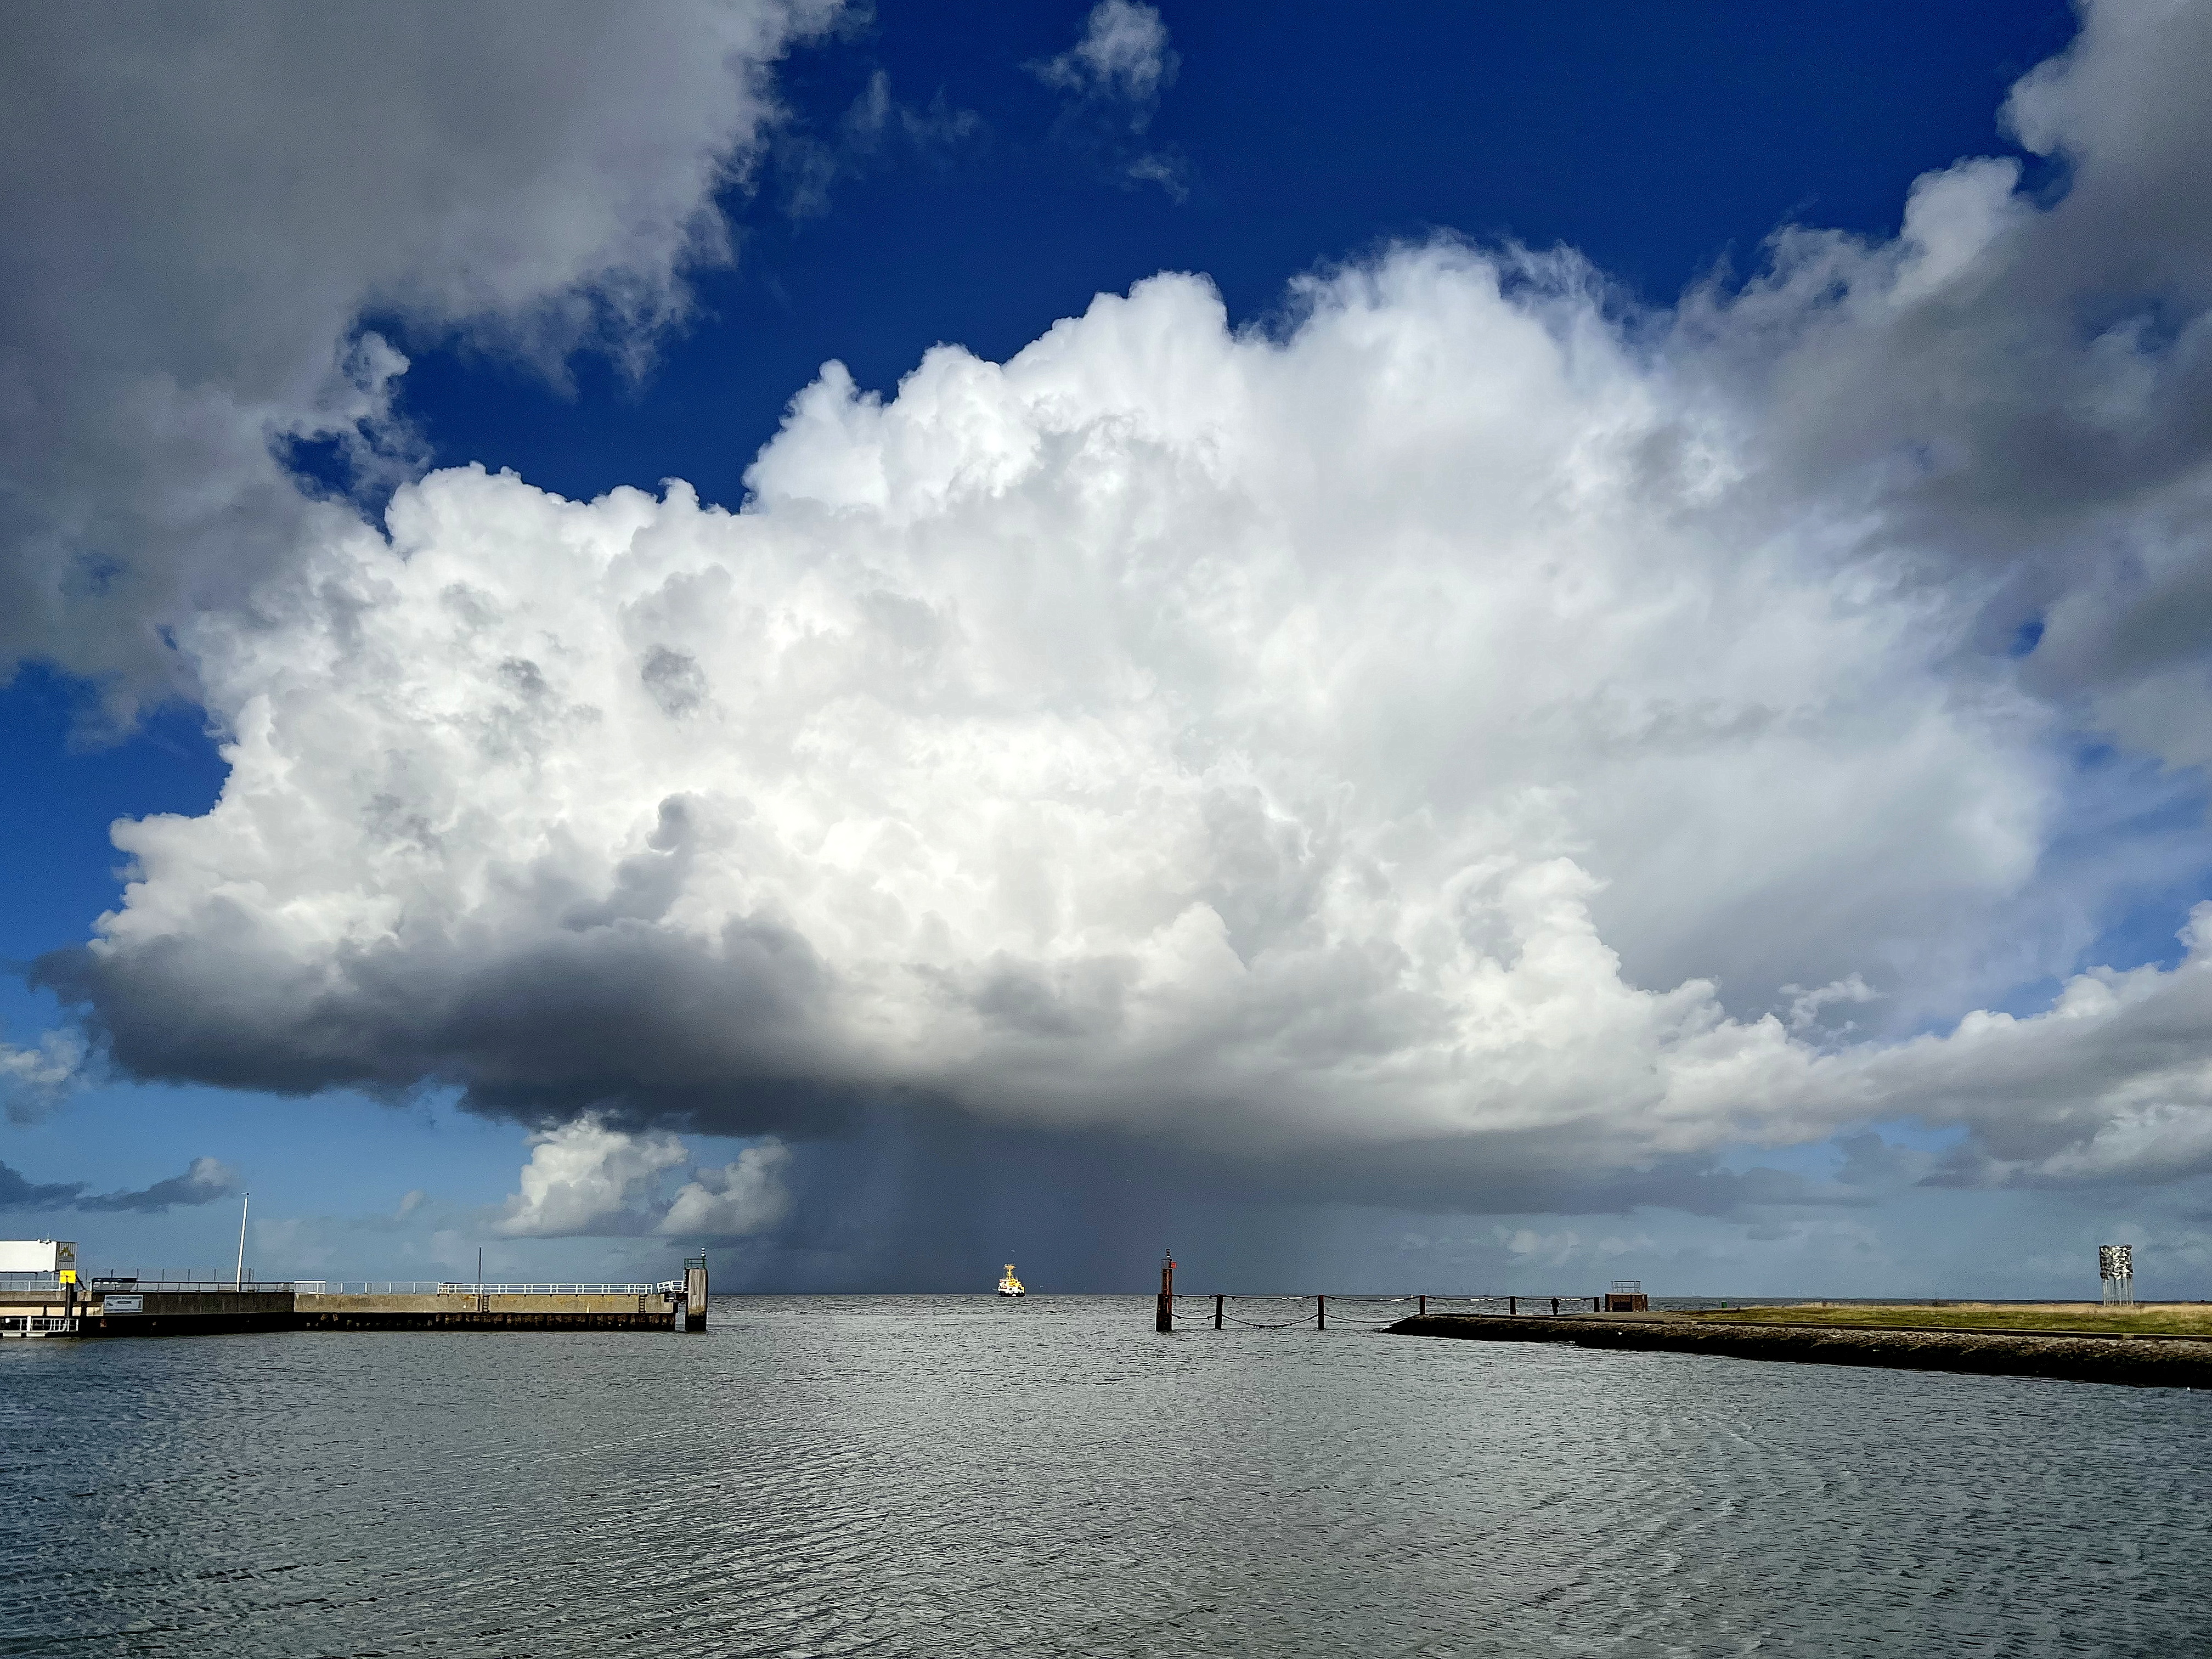 "Wolken, Wasser Watt" - Ausstellung im Wattenmeer-Besucherzentrum Cuxhaven - Fotografien des Cuxhavener Fotografen Wolfgang Scholze